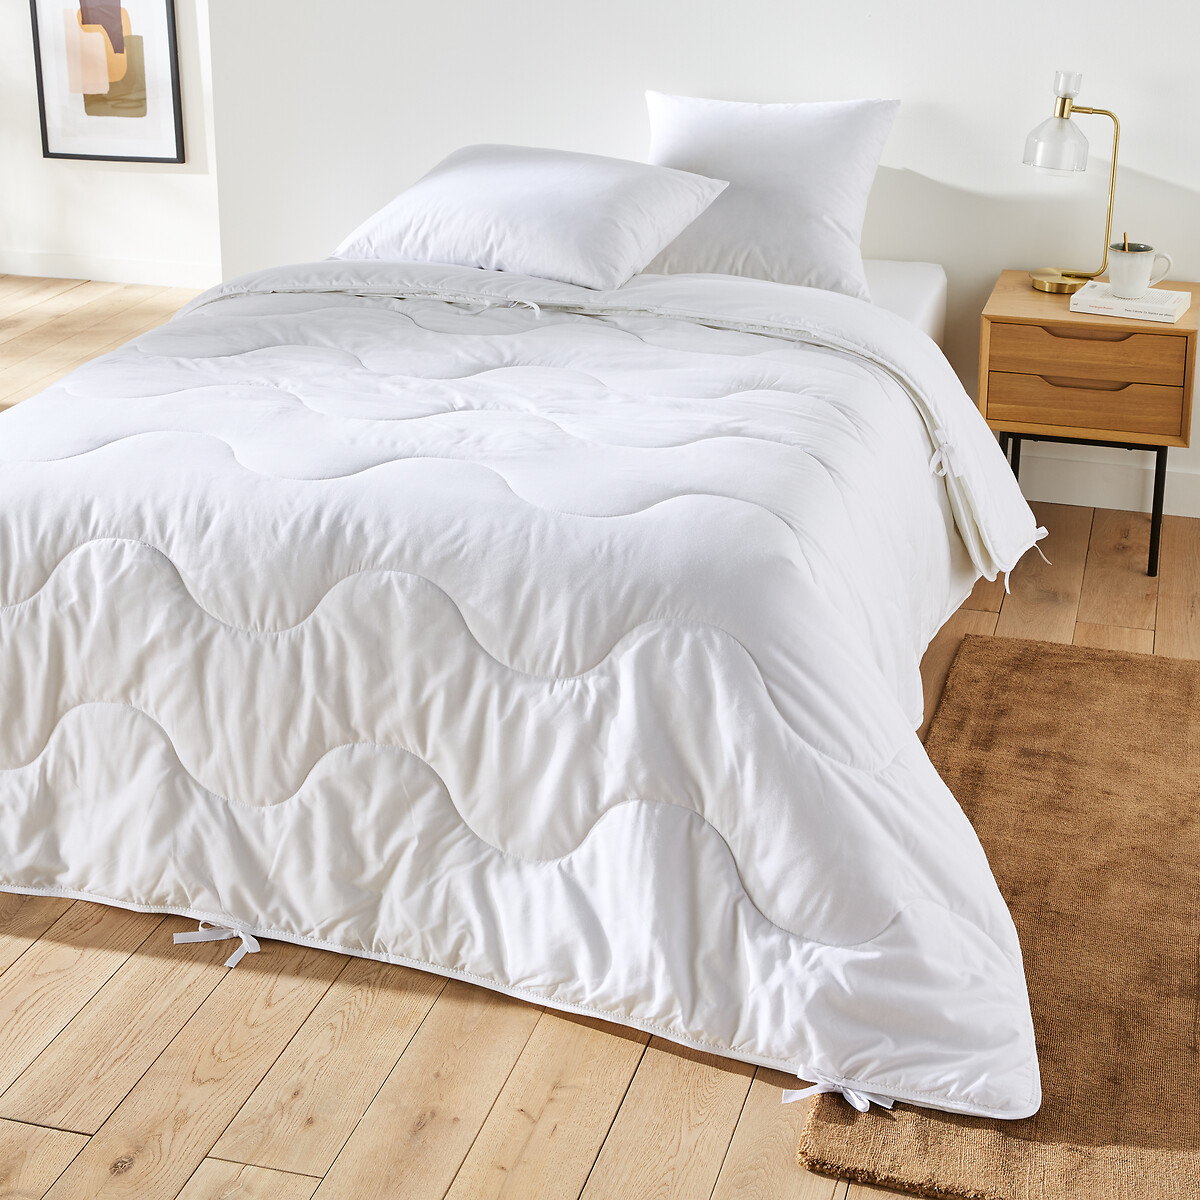 Одеяло La Redoute Двойное  гм   гм с обработкойProneem 200 x 200 см белый, размер 200 x 200 см - фото 1